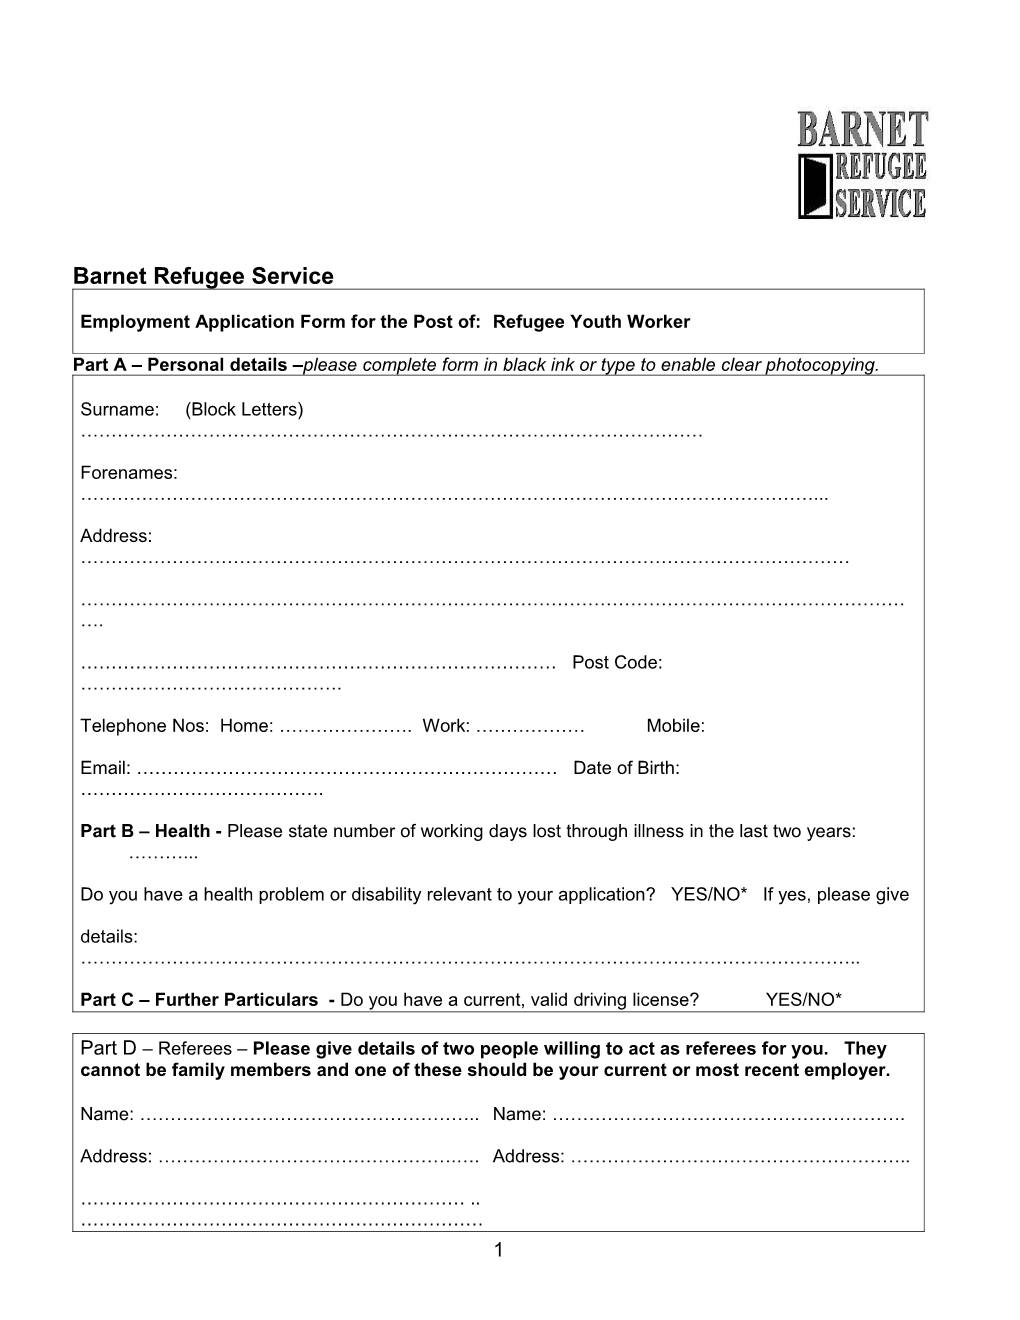 BRS Application Form